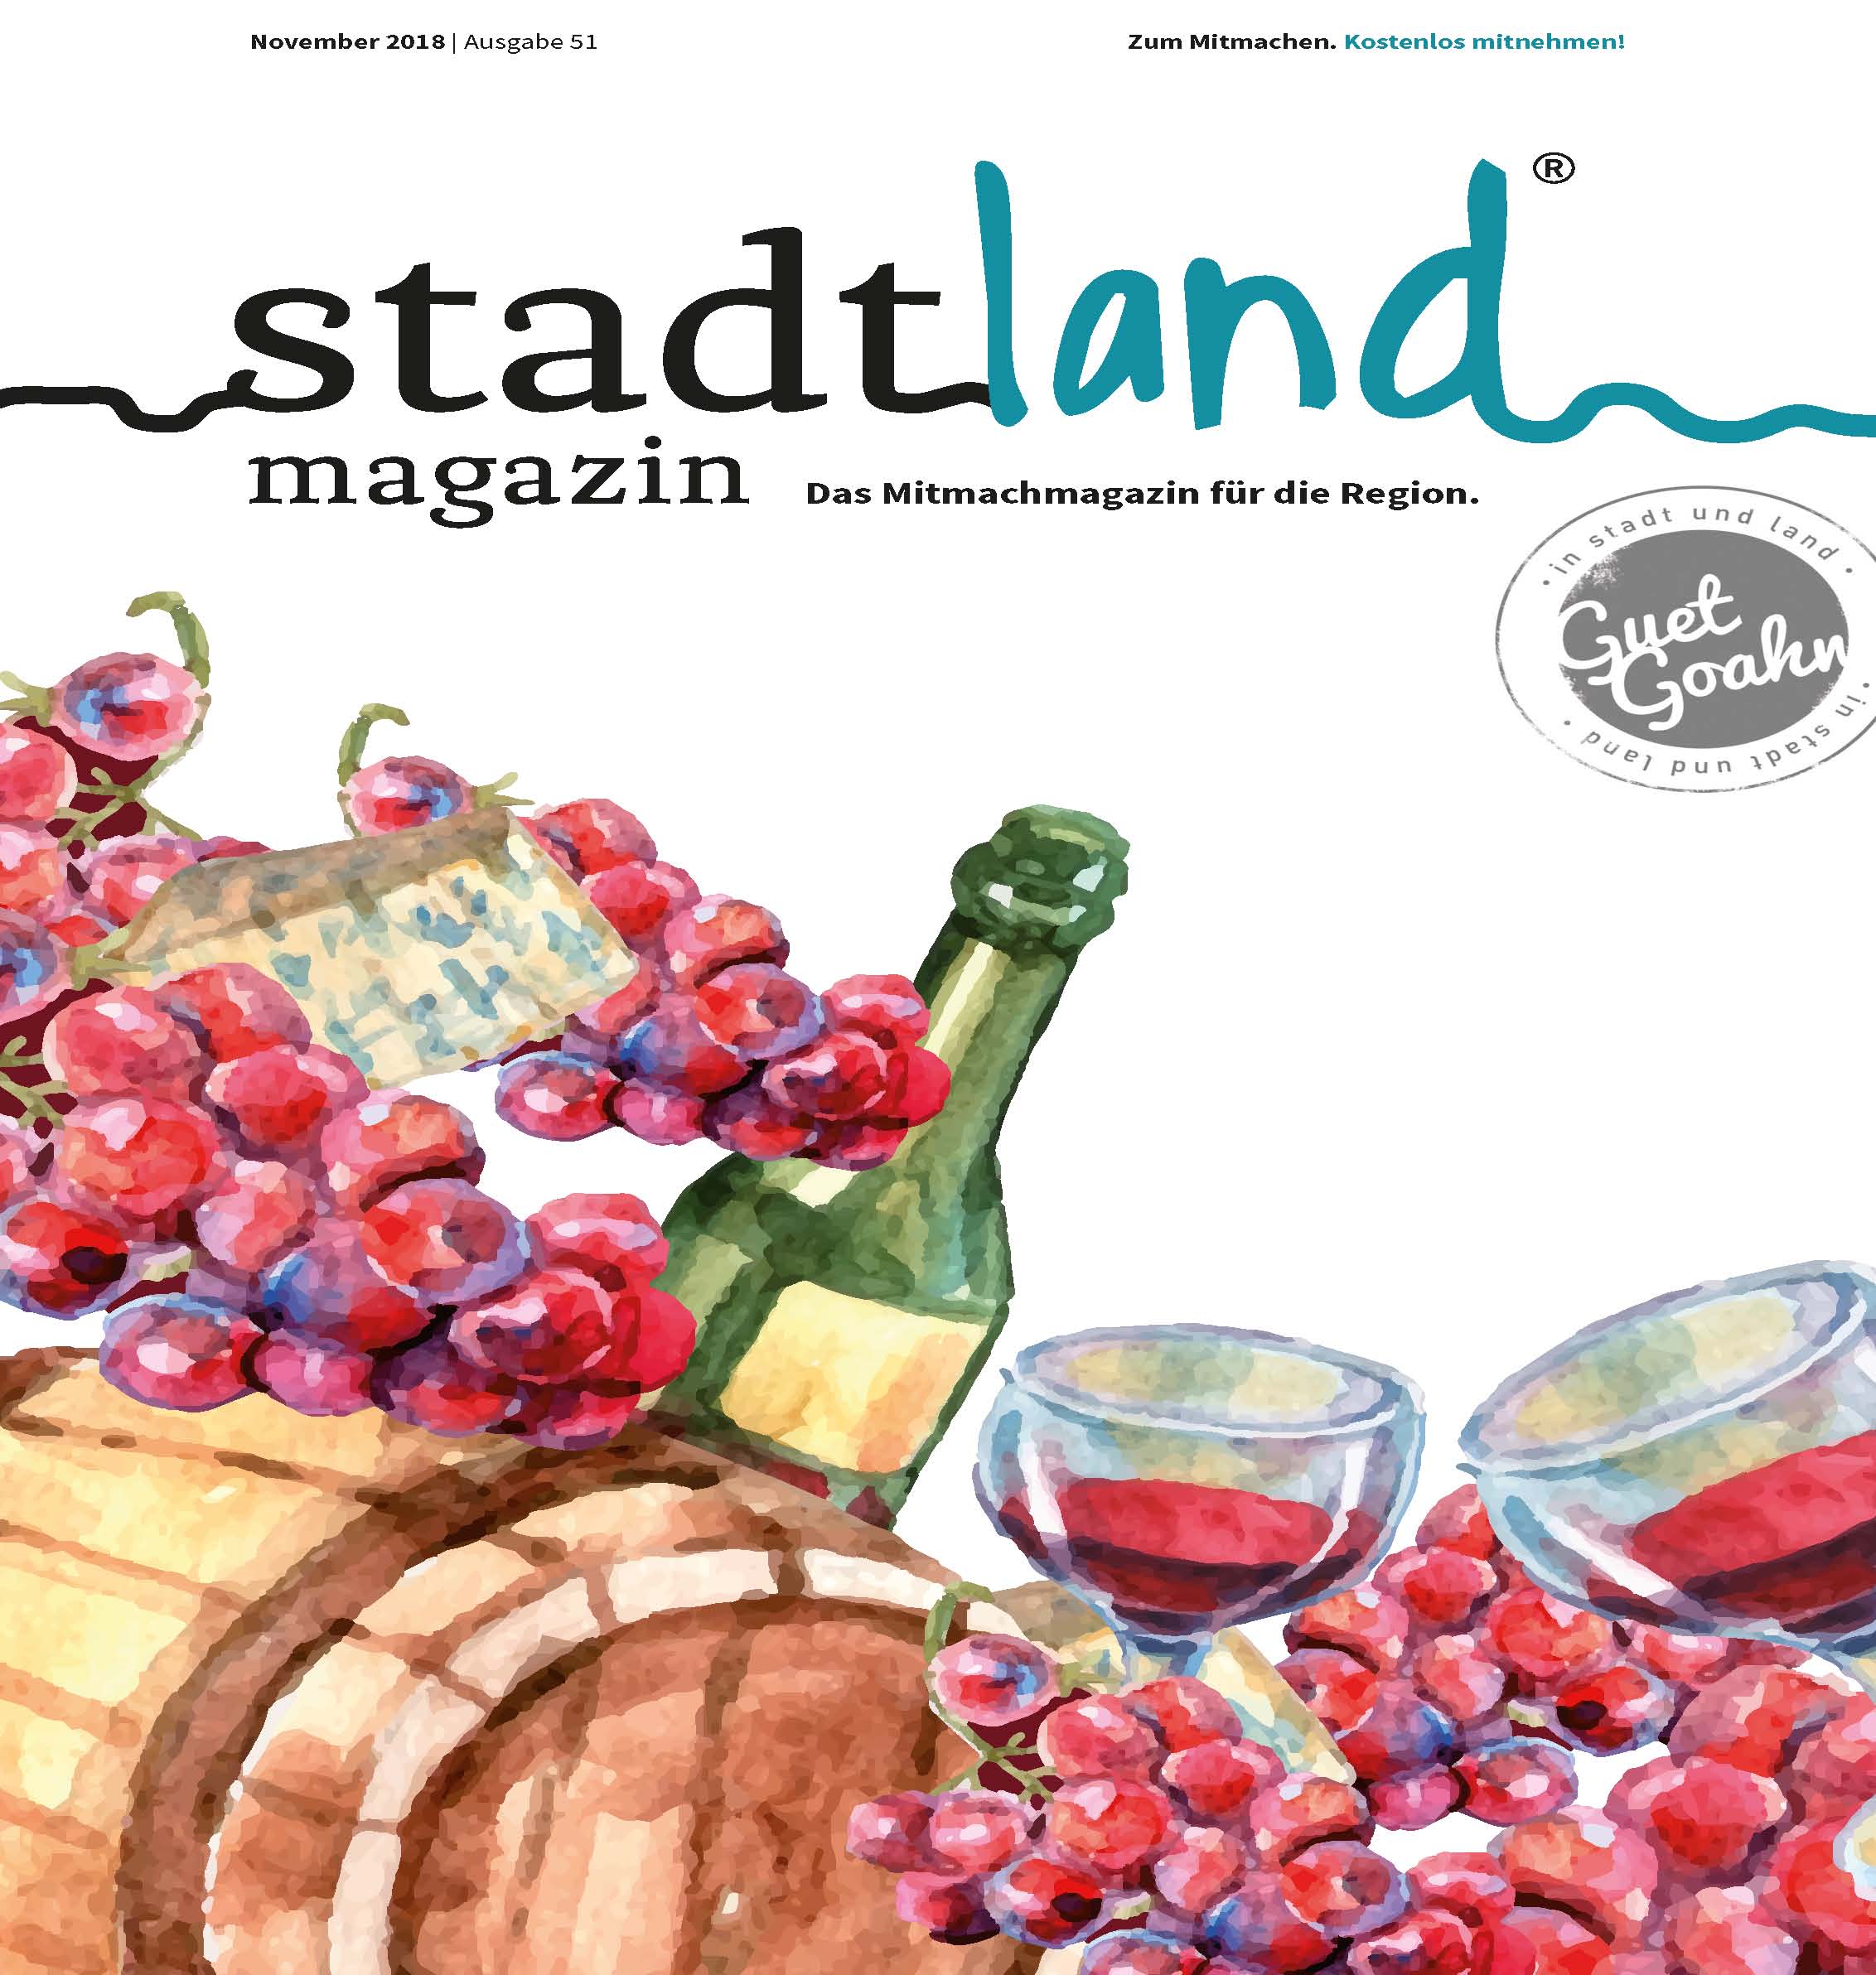 stadtland magazin November 2018